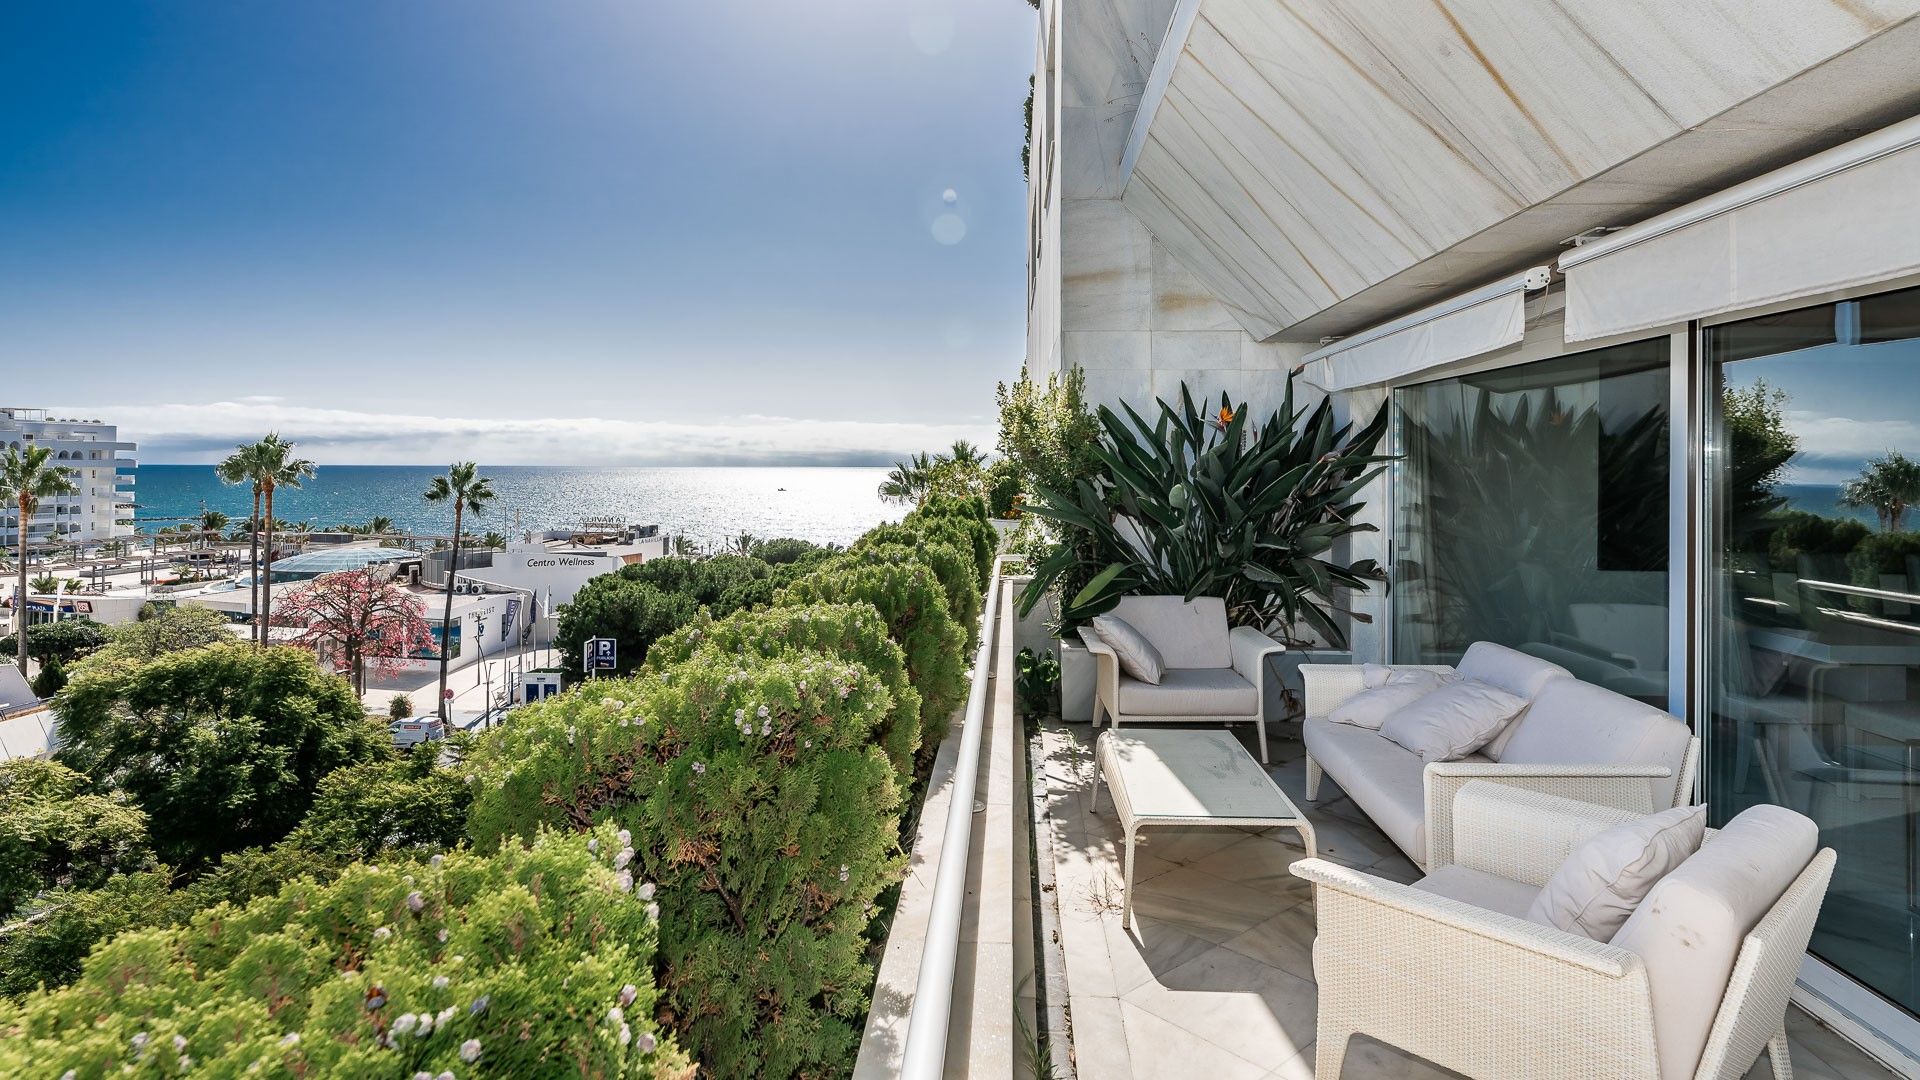 Luxurious apartment next to the beach, Nayades | Engel & Völkers Marbella